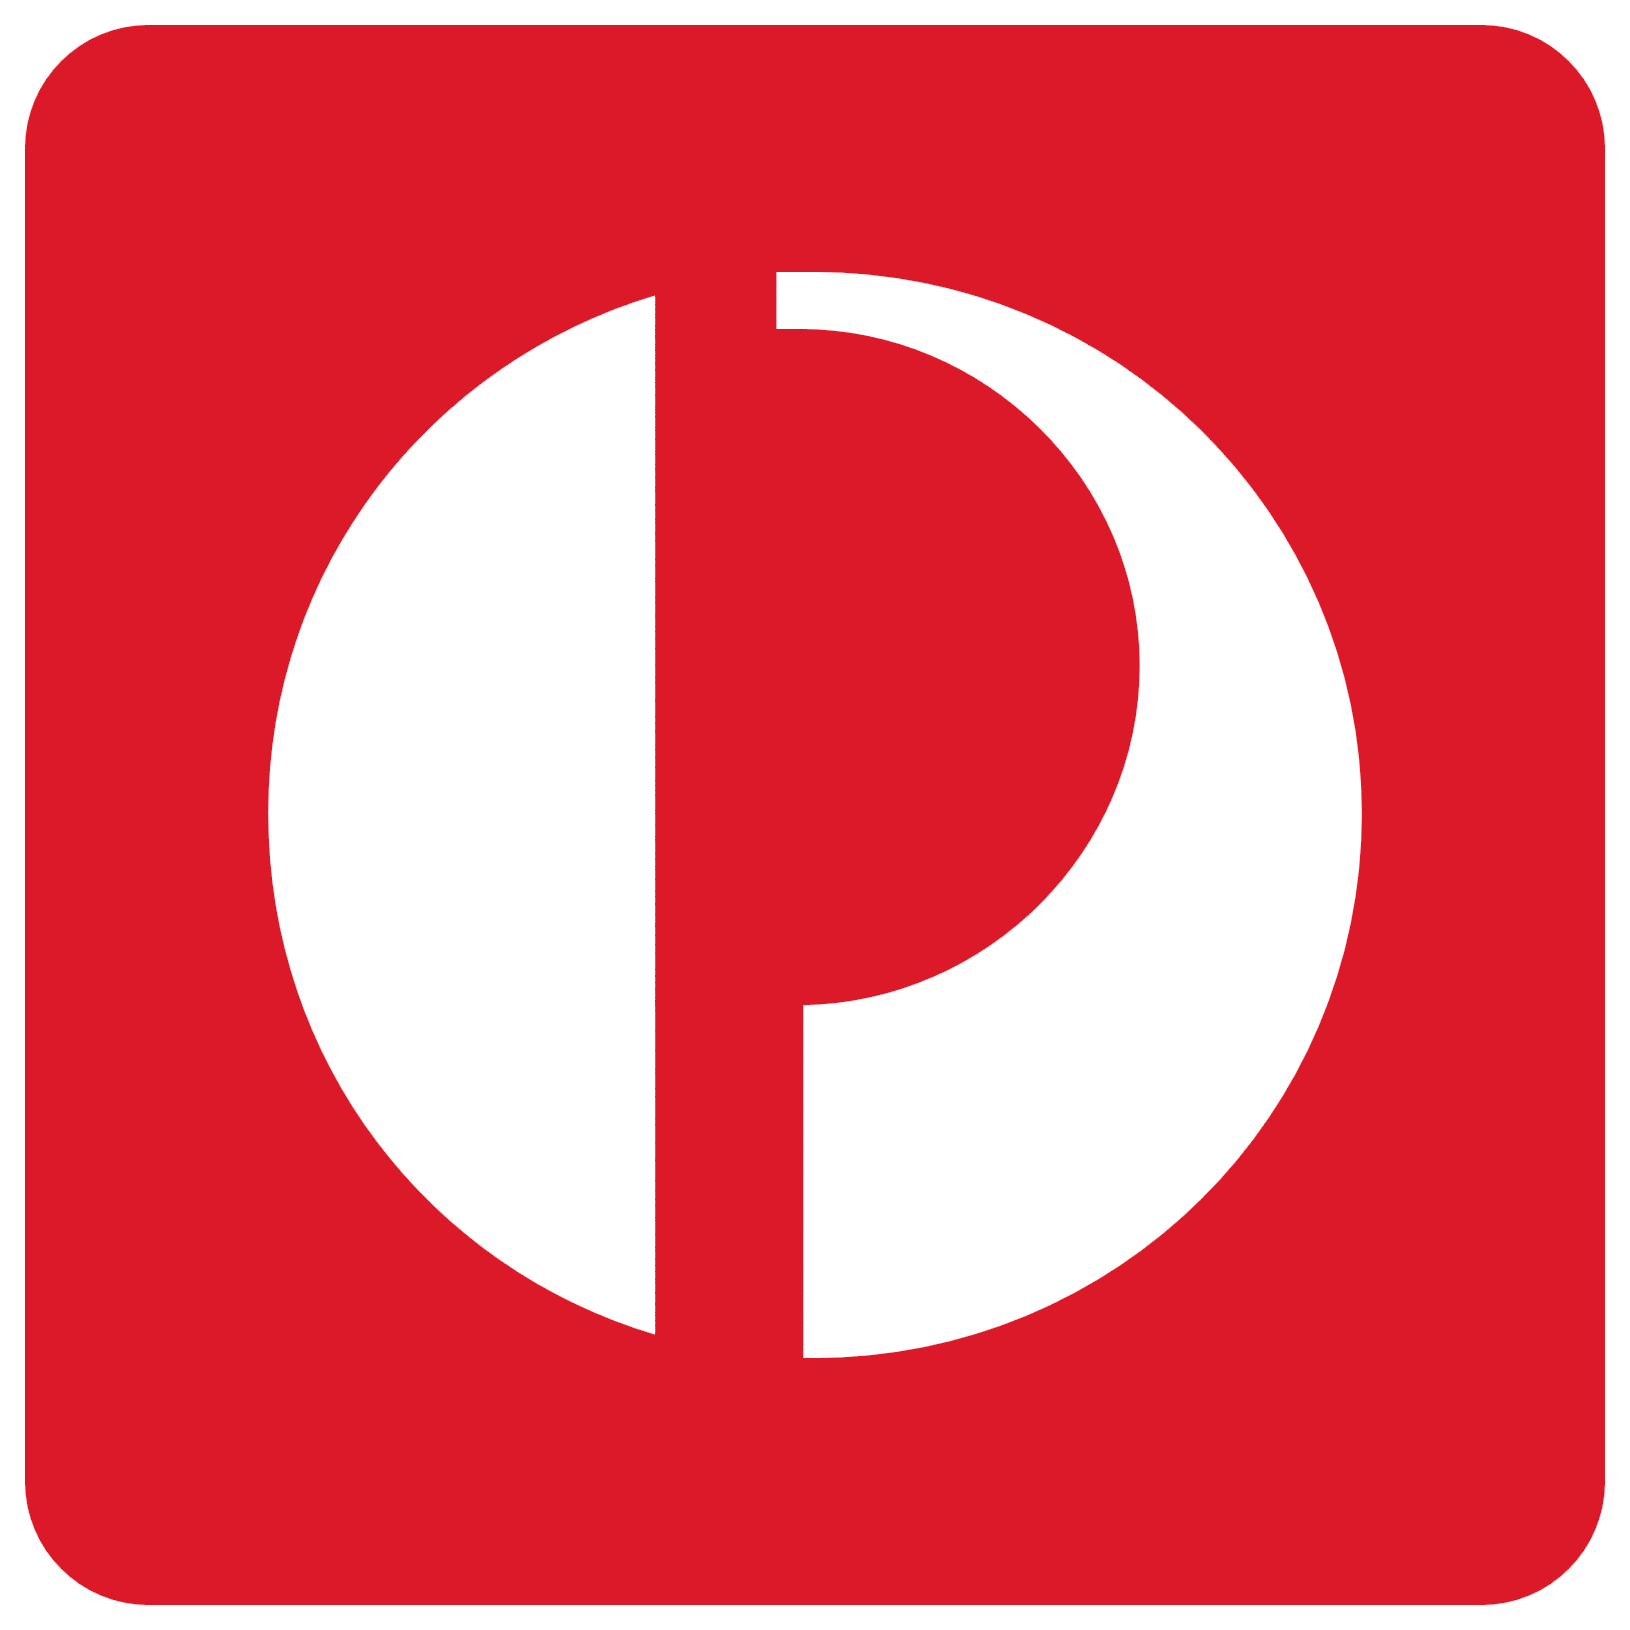 Australia Post logo, logotype